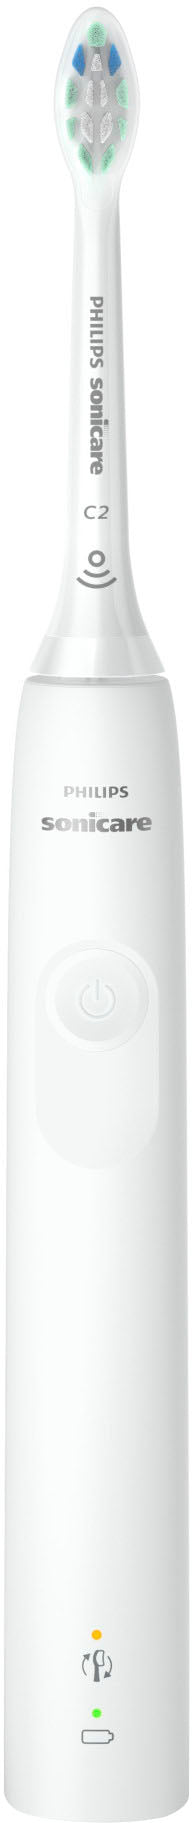 Philips Sonicare 4100 Power Toothbrush - White_1